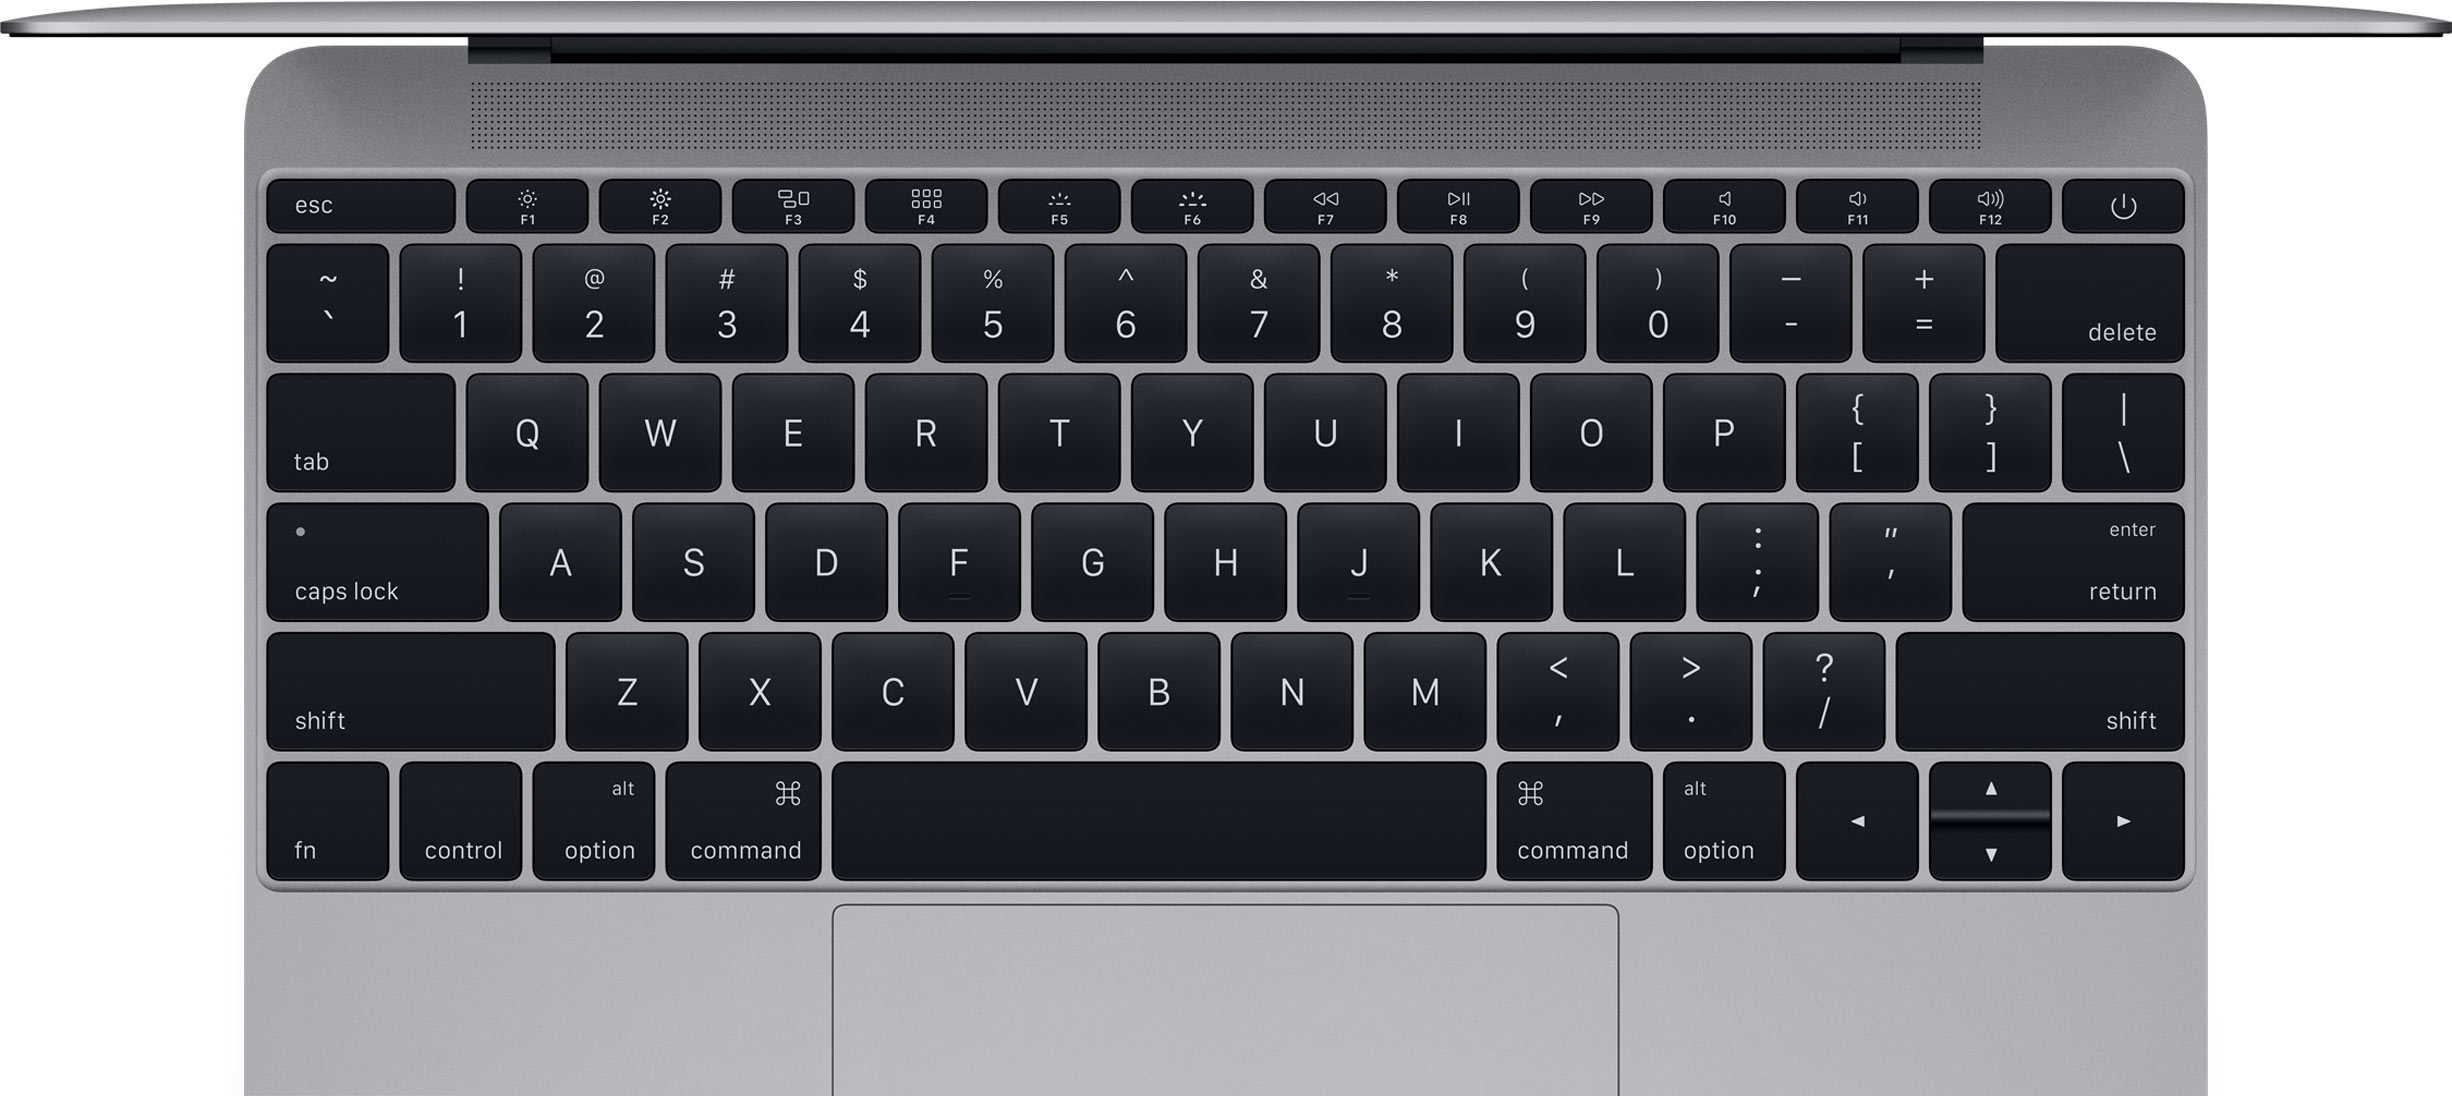 What Do the F1, F2, F3, Through F12 Keys Do on Mac Keyboards?